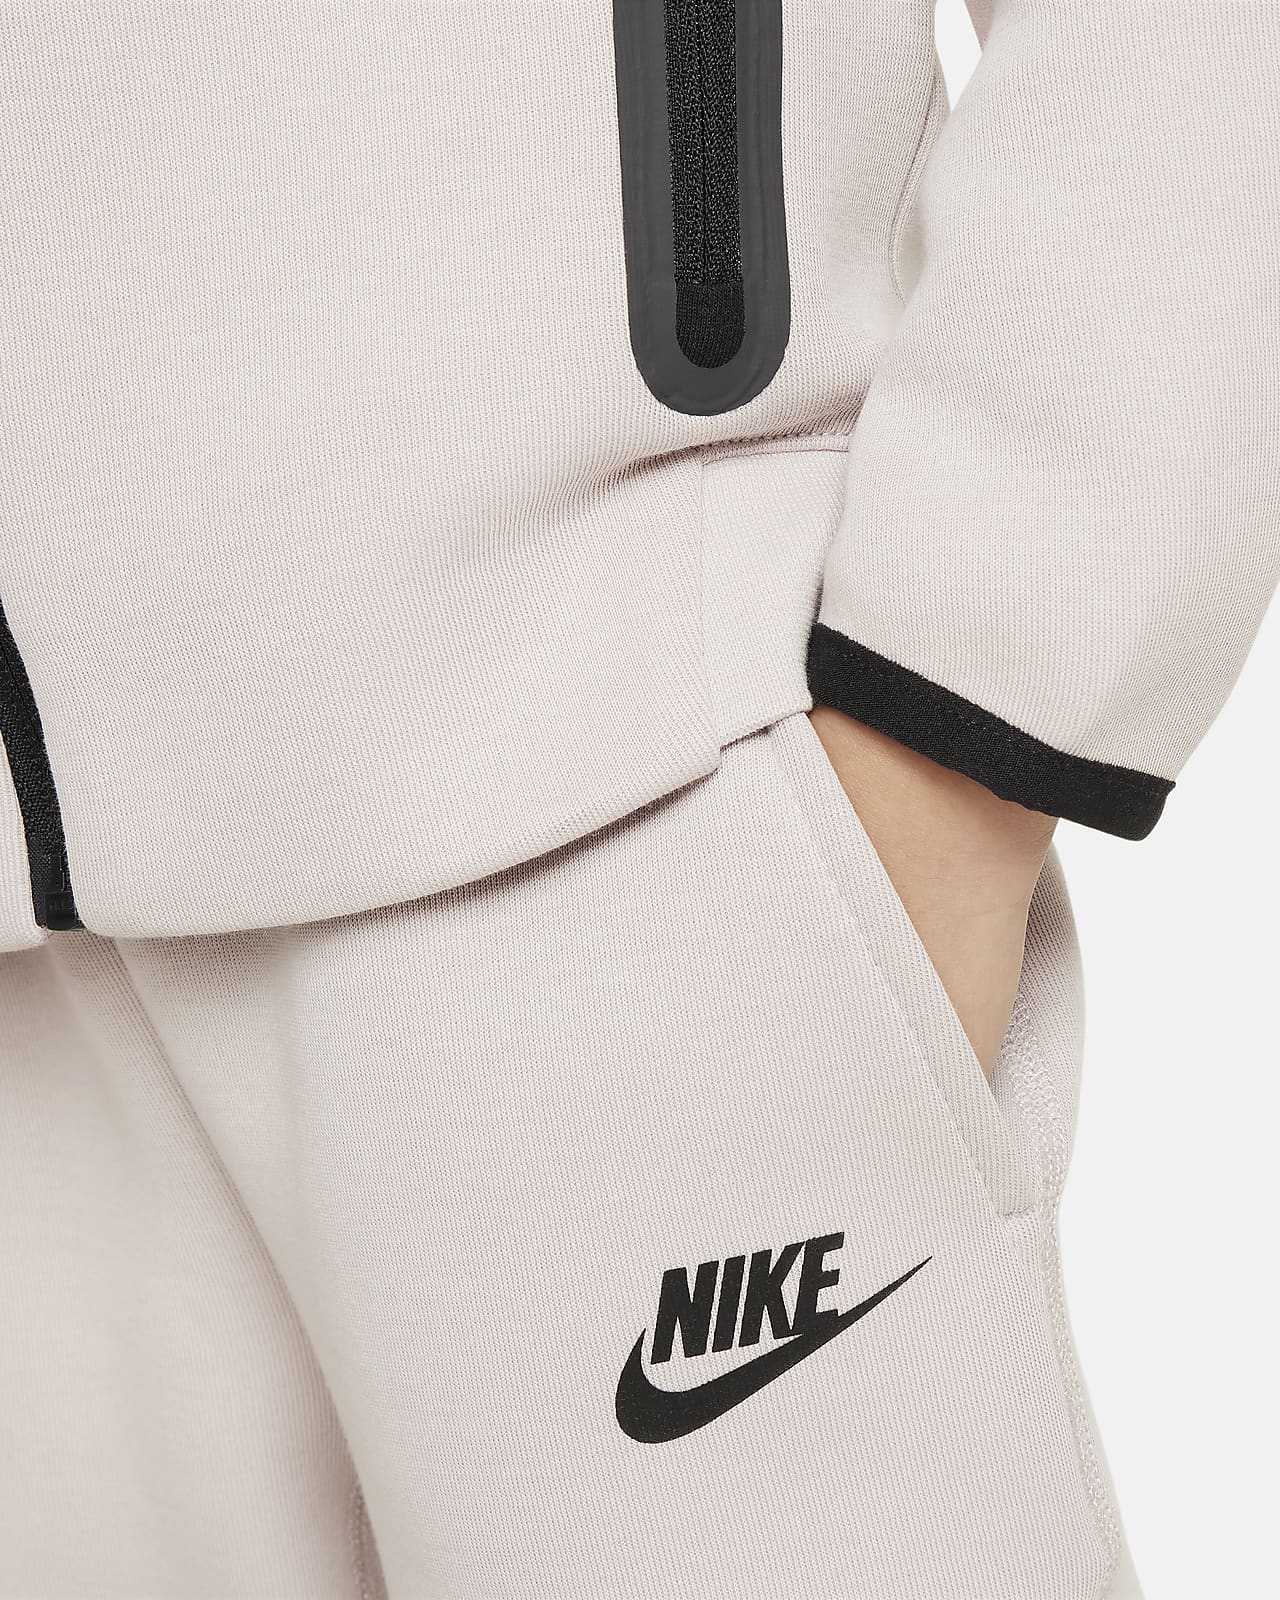 Nike Tech Fleece Taped Full Zip Hoodie and Jogger Set Pitt Cream